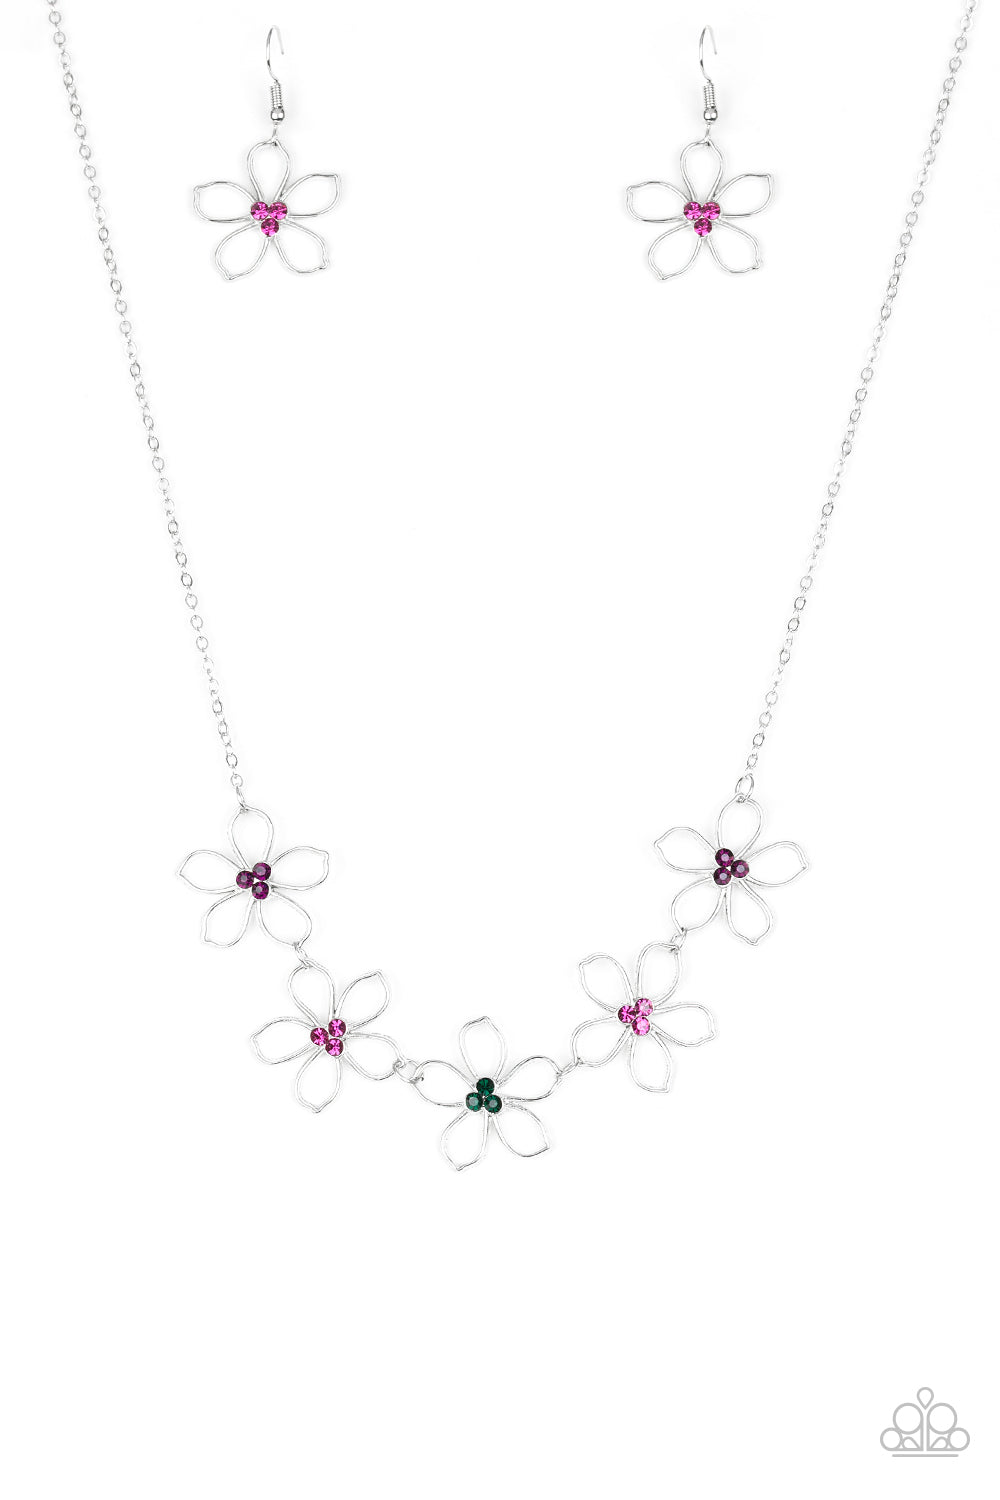 Hoppin Hibiscus - Multi Necklace freeshipping - JewLz4u Gemstone Gallery